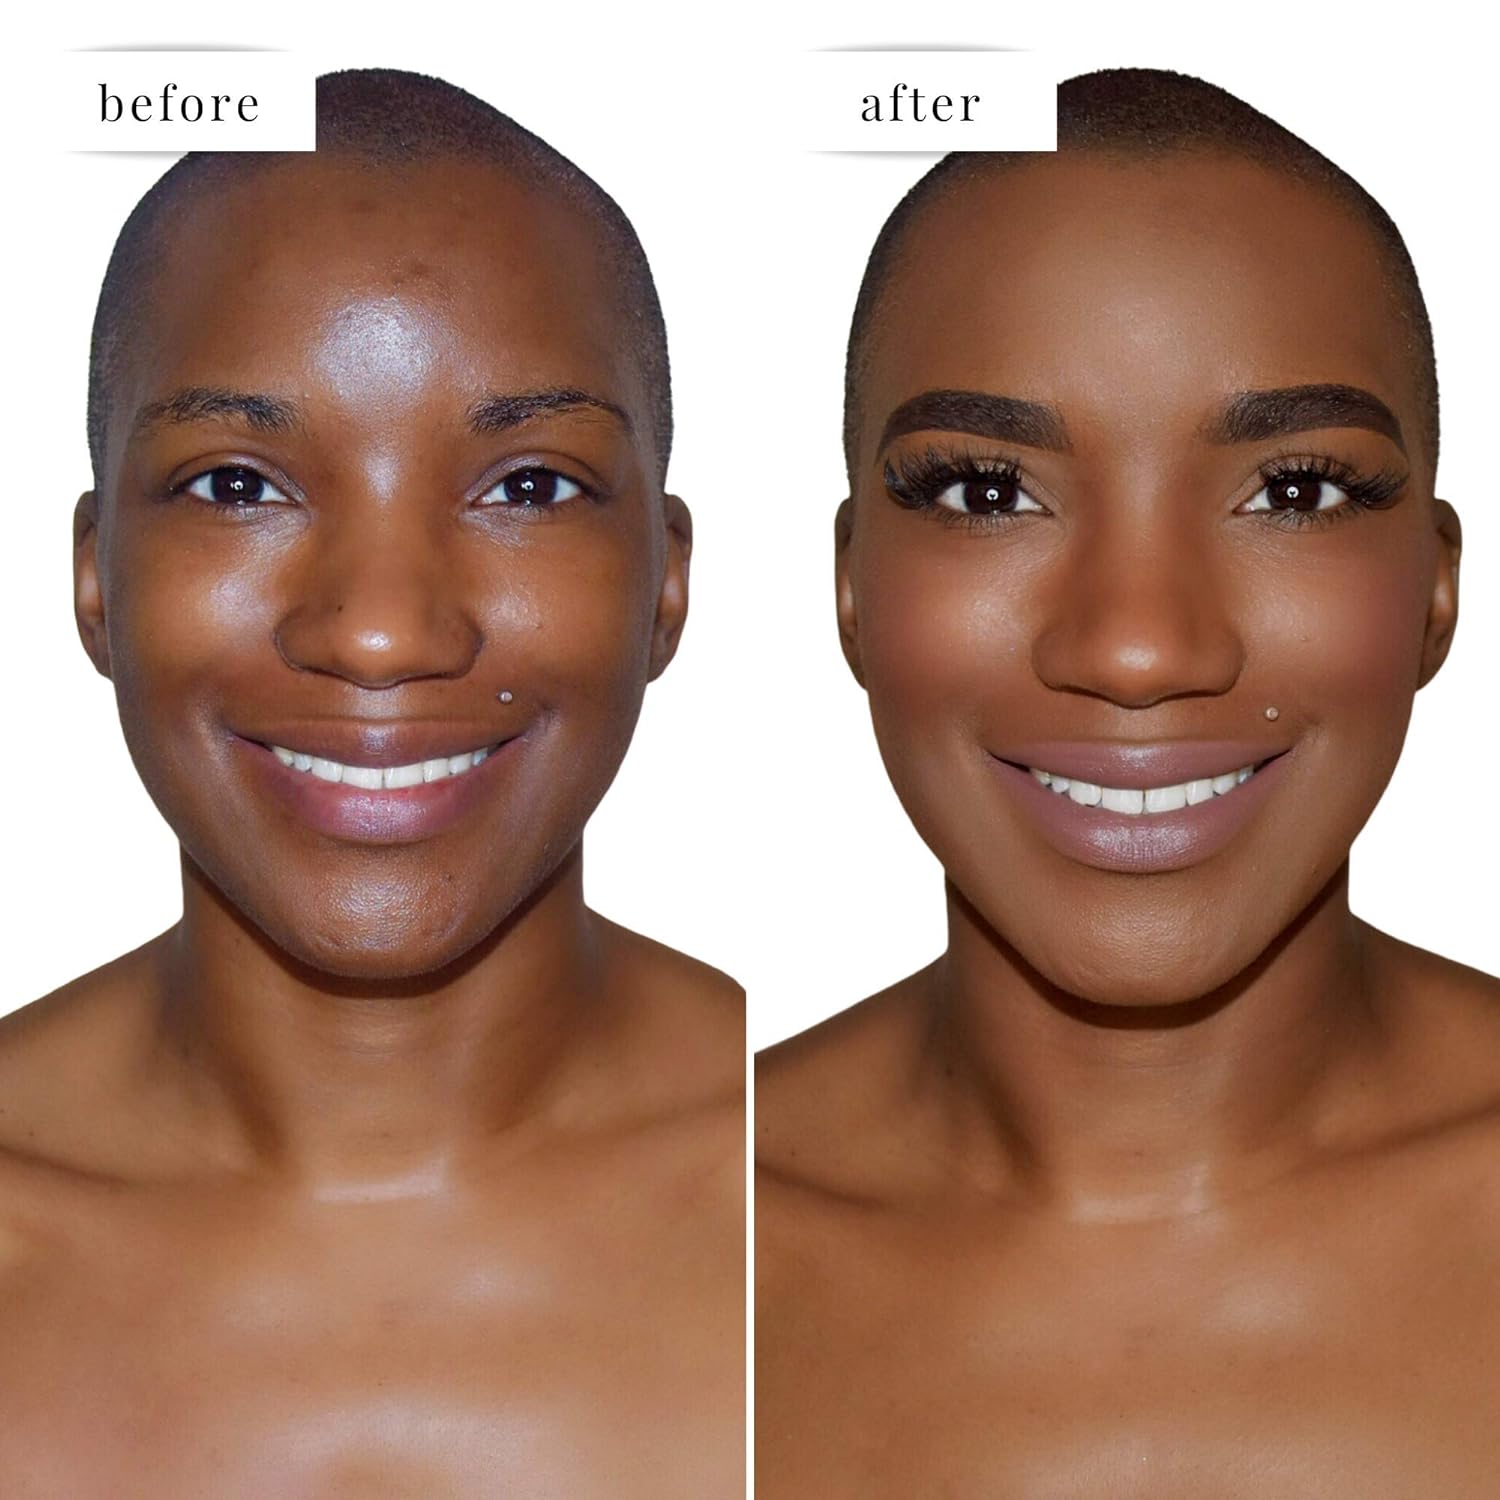  Matte Makeup Base Primer for Face: Elizabeth Mott Thank Me Later Face Primer for Oily Skin - Pore Minimizer, Shine Control Make Up Primer to Hide Wrinkles and Fine Lines - Cruelty